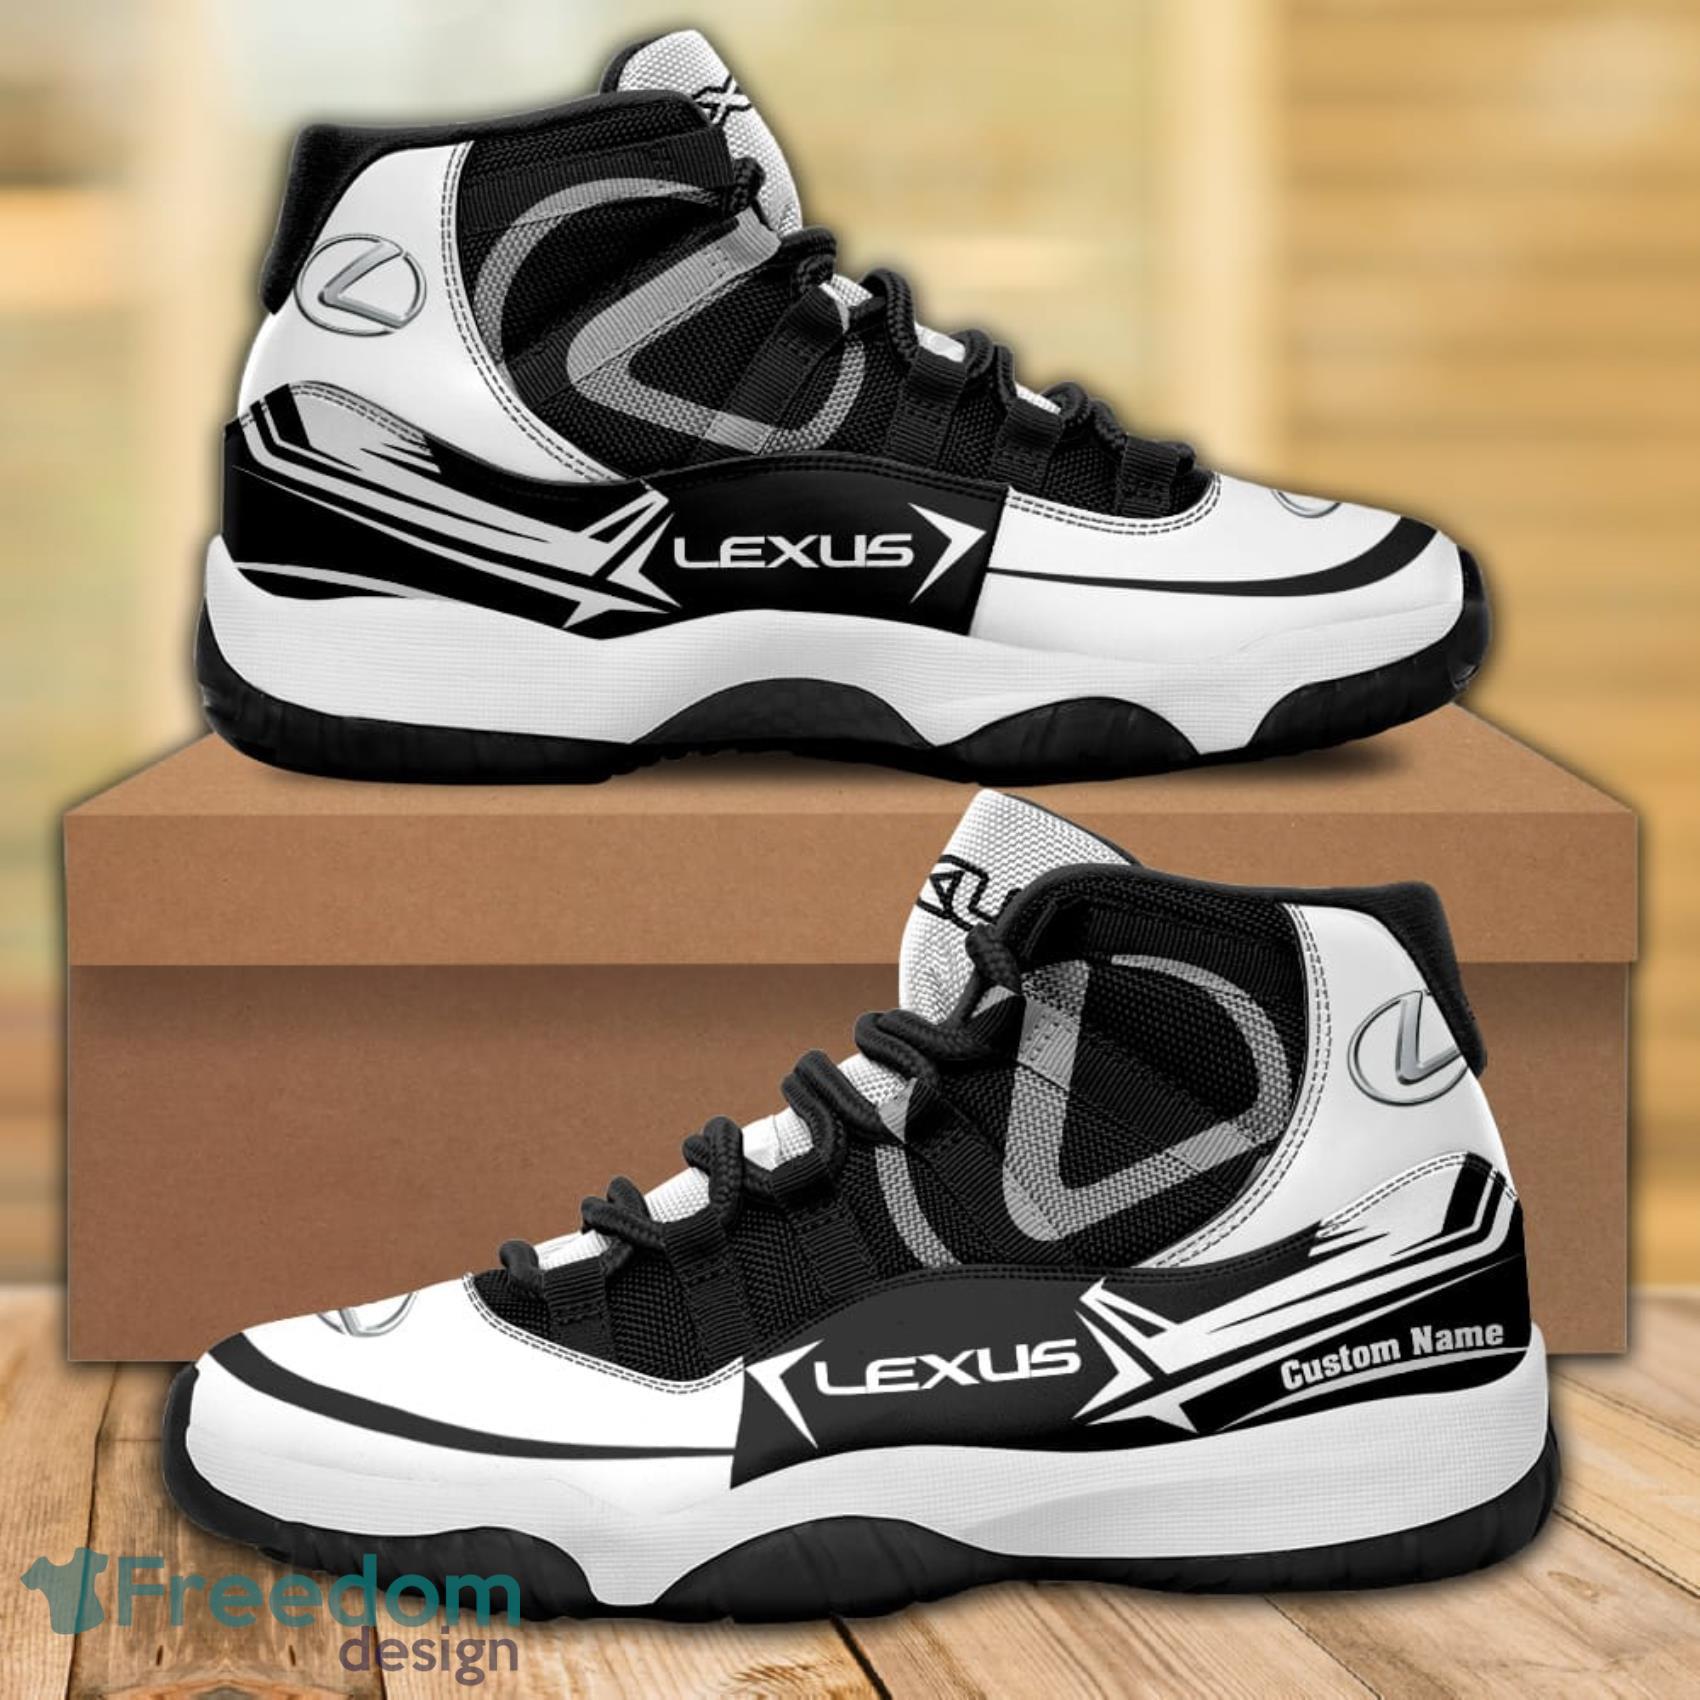 Lexus Custom Name Any Logo Or Air Jordan 11 Shoes Gift For Fans